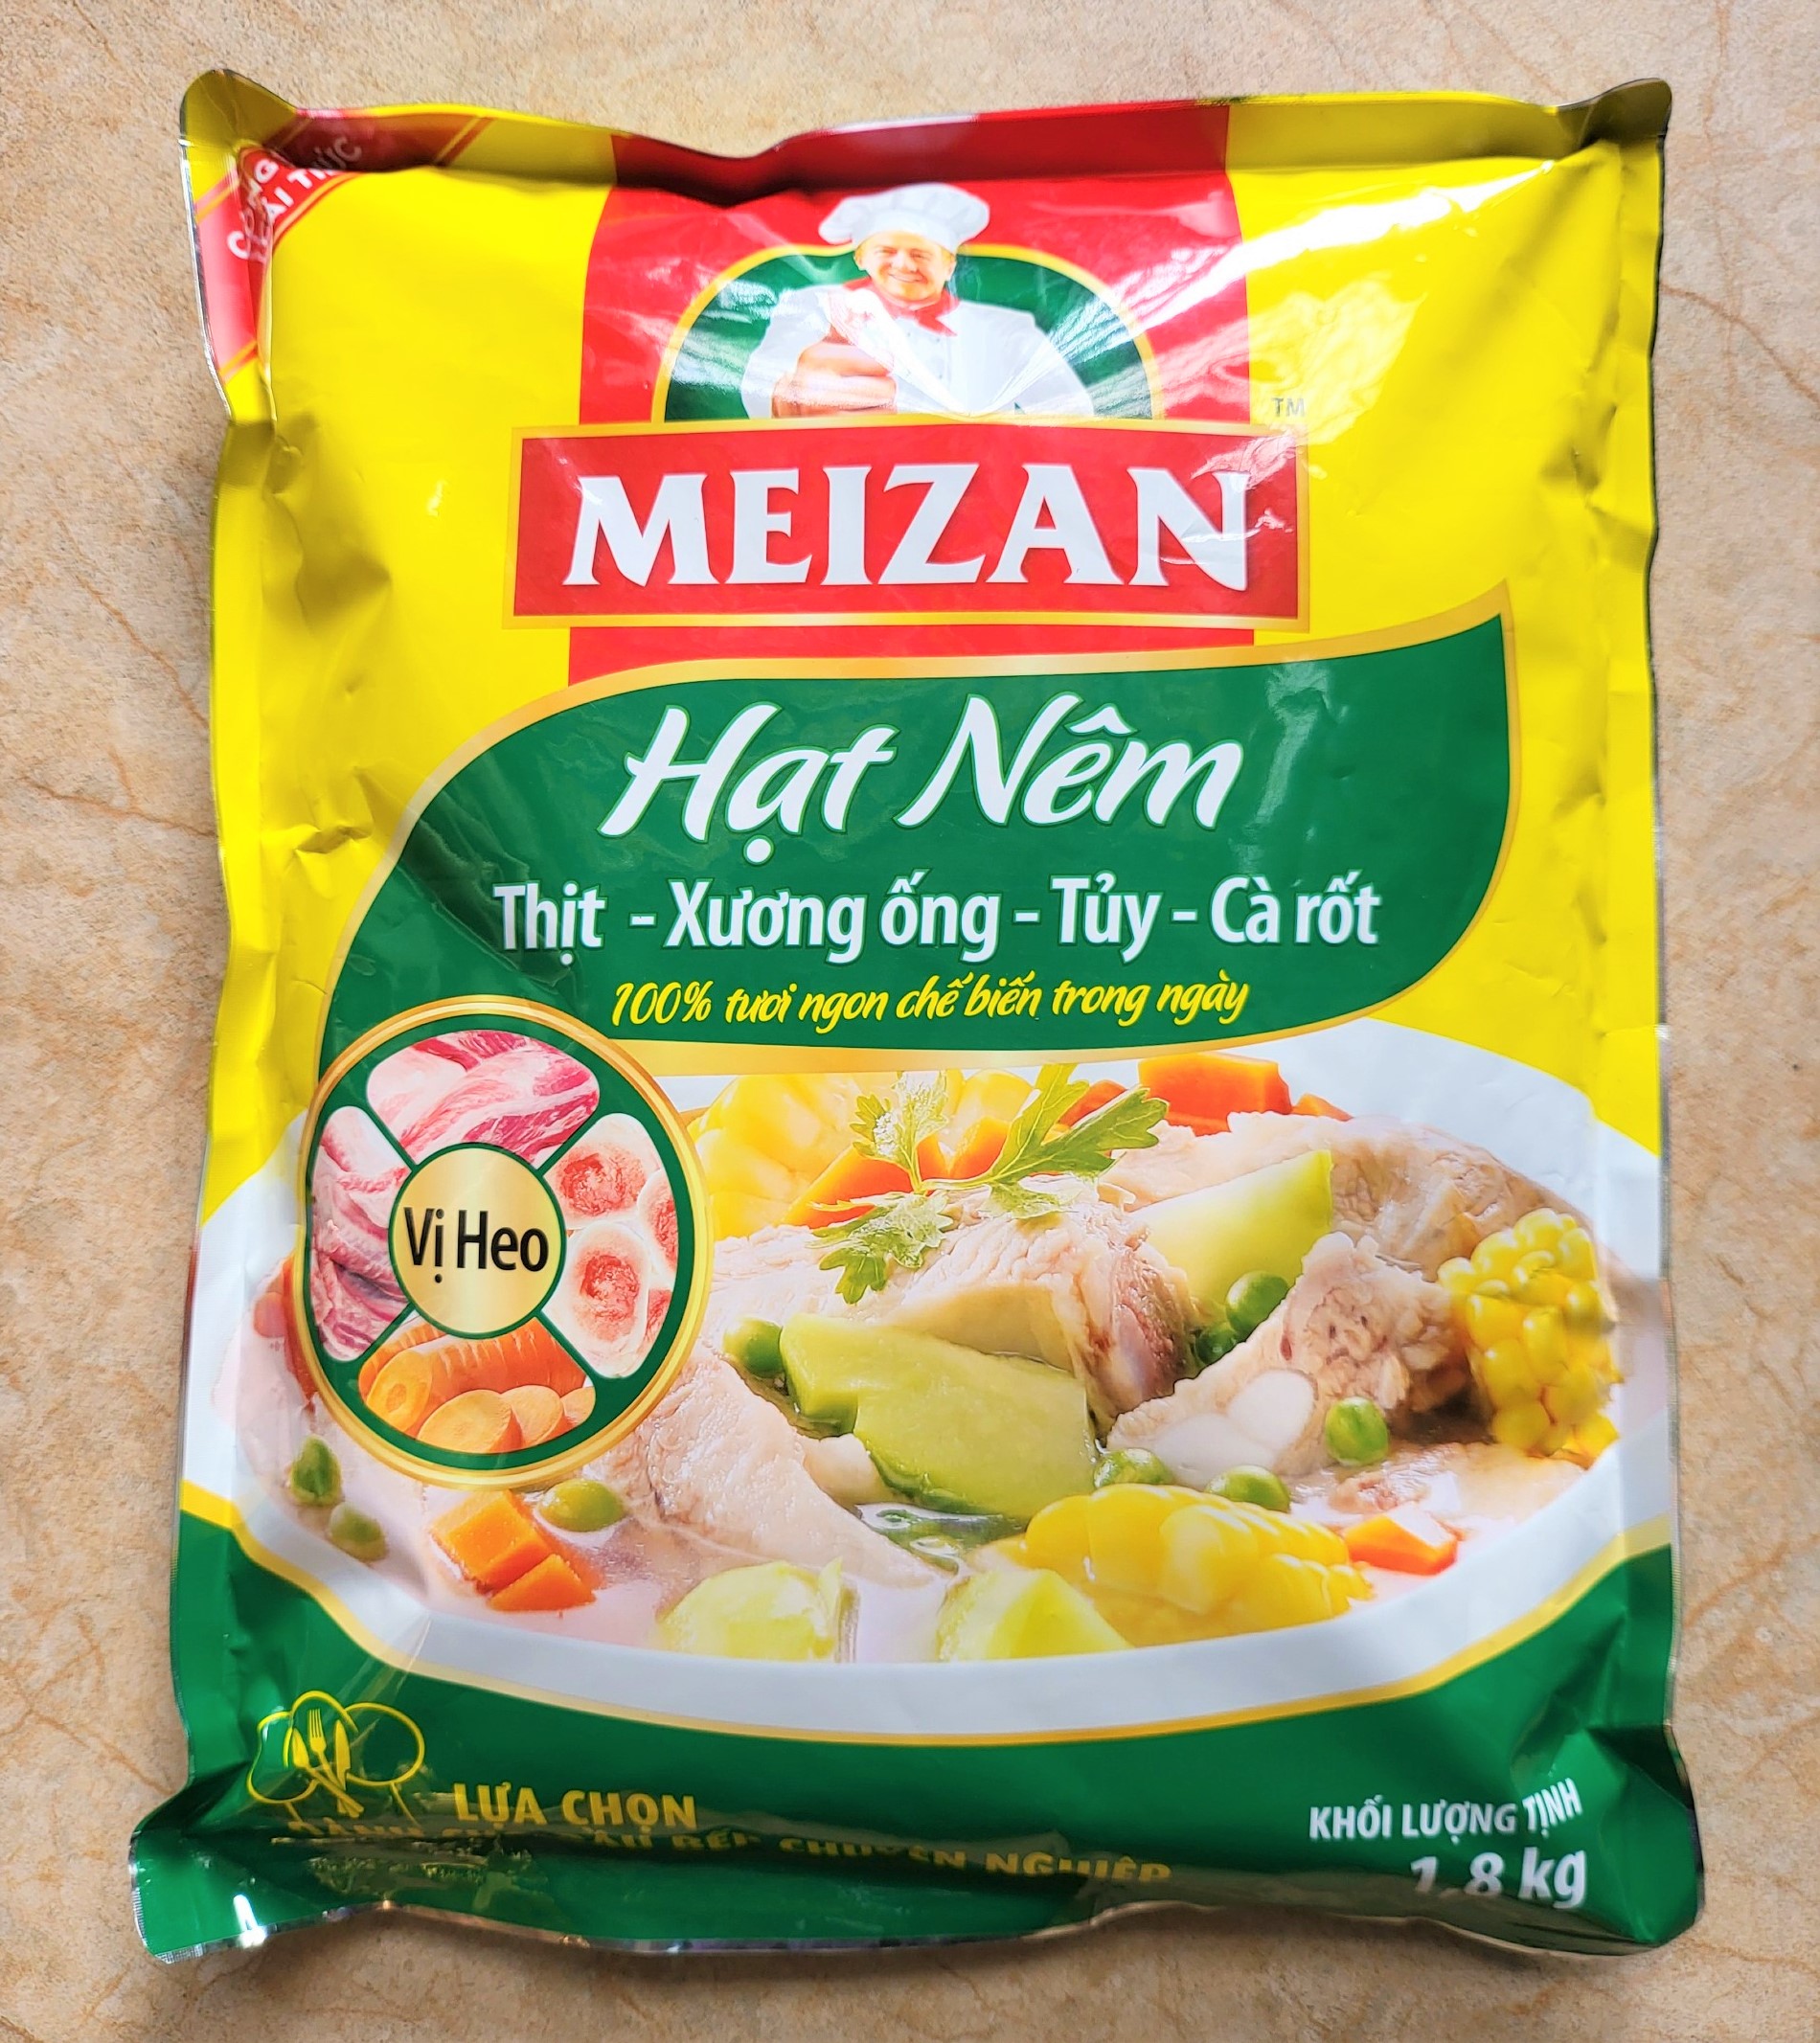 GÓI LỚN 1.8 Kg HẠT NÊM VỊ HEO MEIZAN Pork Seasoning